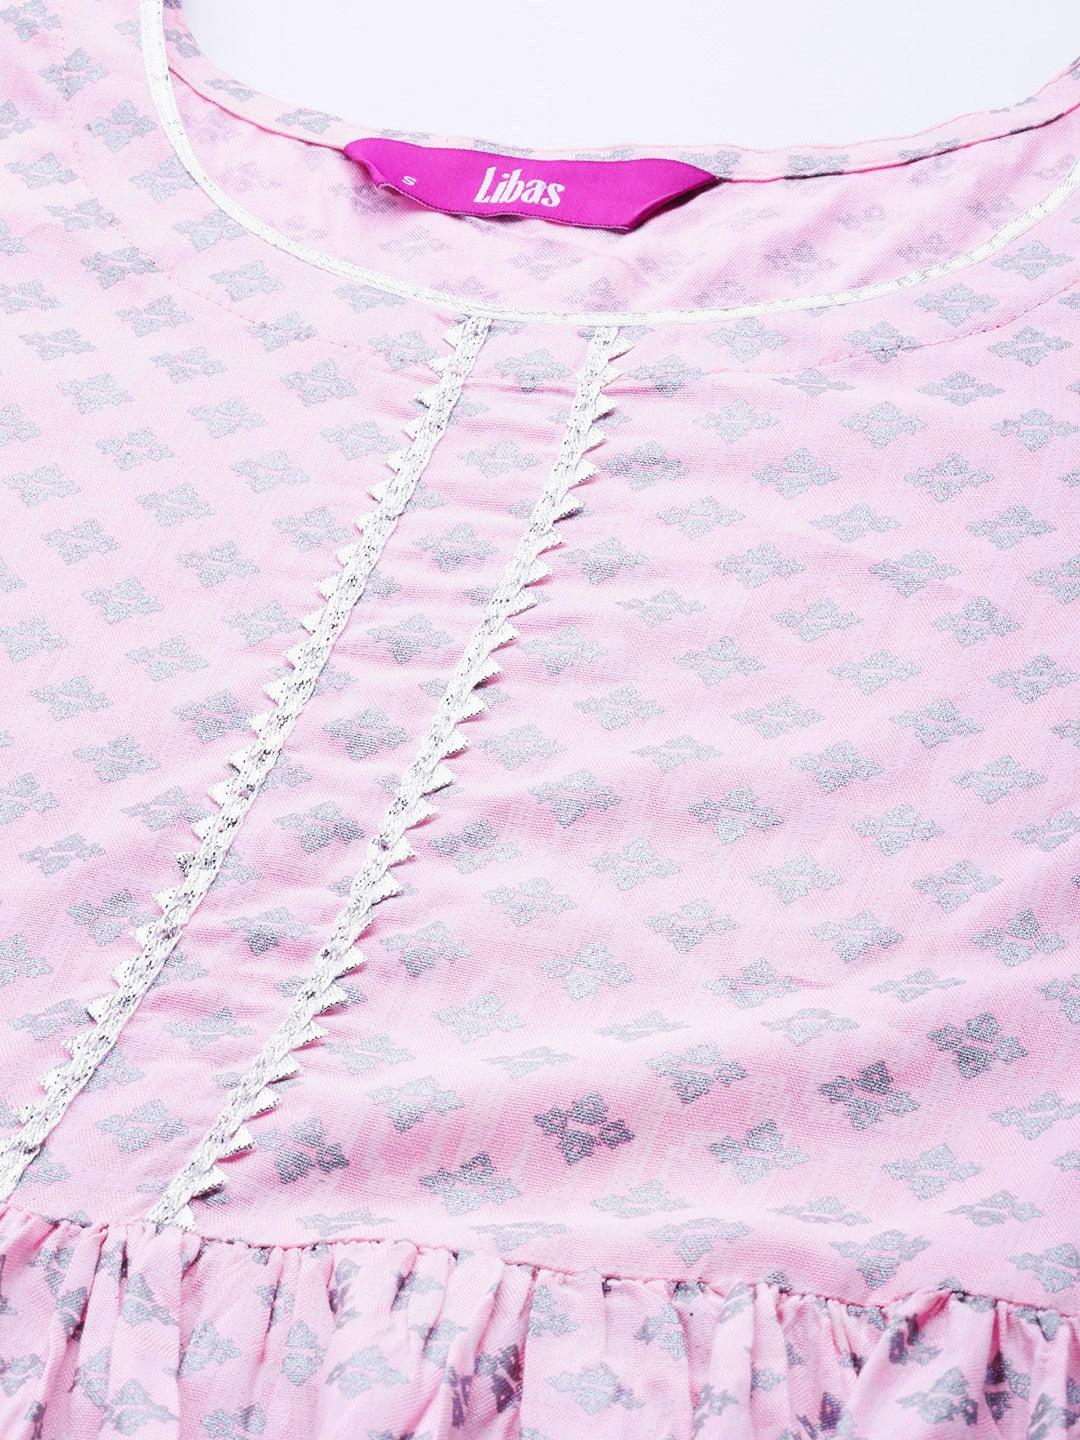 Pink  Printed Cotton Dress